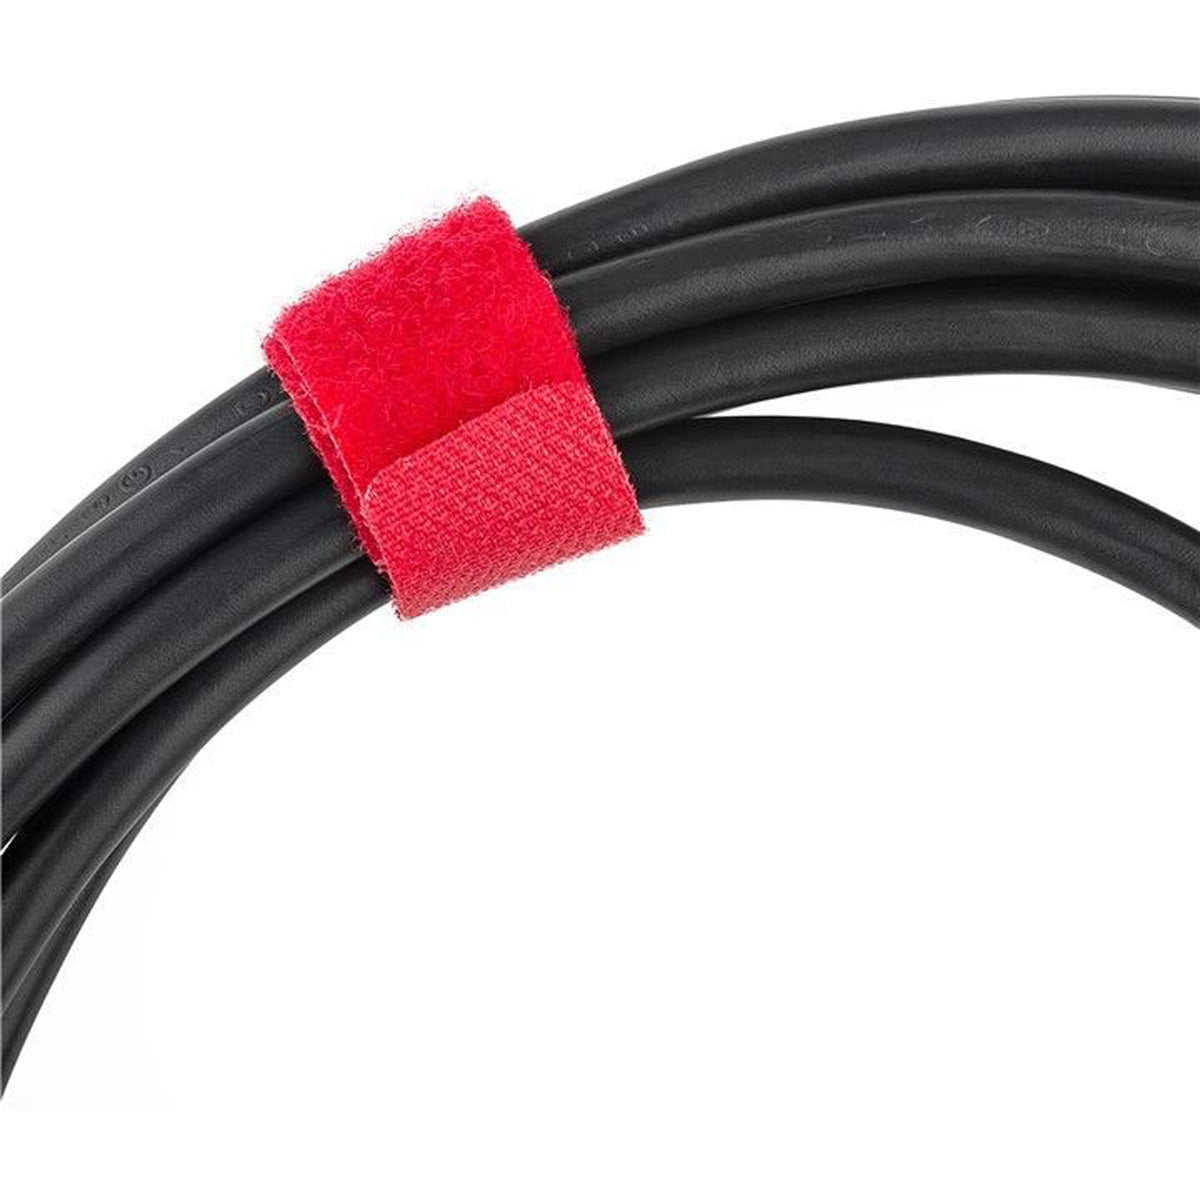 Goobay Cable Management Hook & Loop Set - Multicolor.